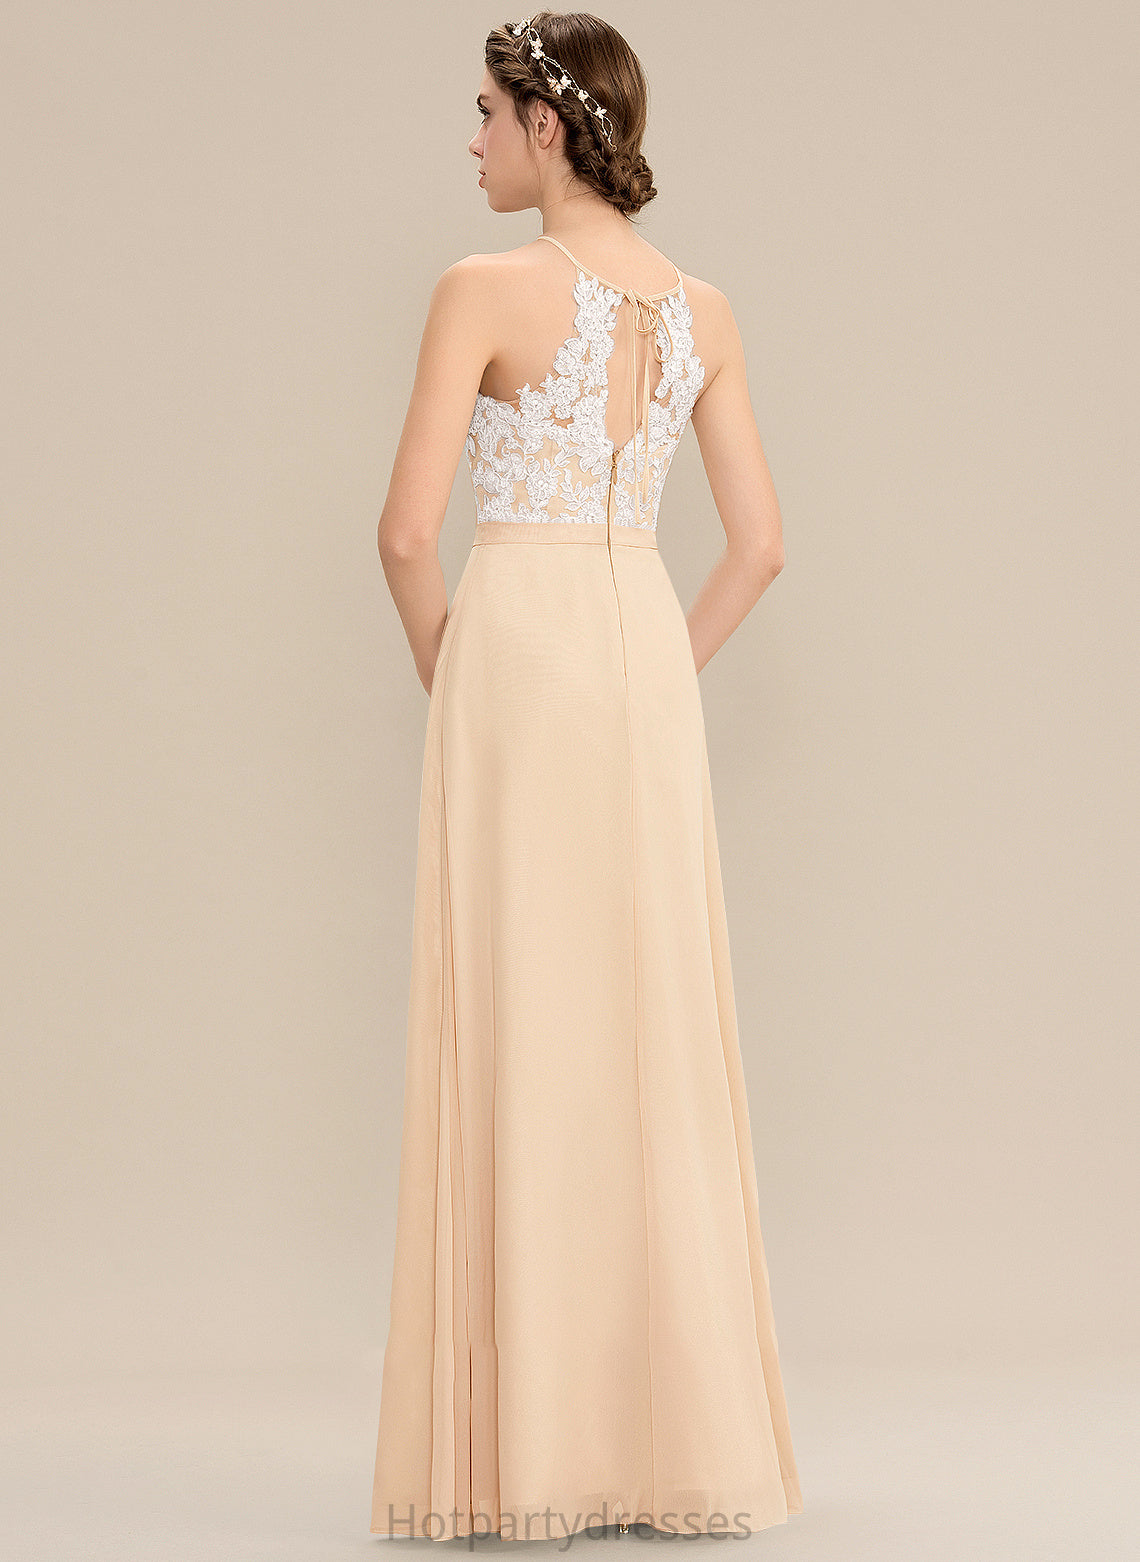 Bow(s) A-Line Length Embellishment ScoopNeck Silhouette Fabric Neckline Floor-Length Isabelle Sleeveless V-Neck Bridesmaid Dresses